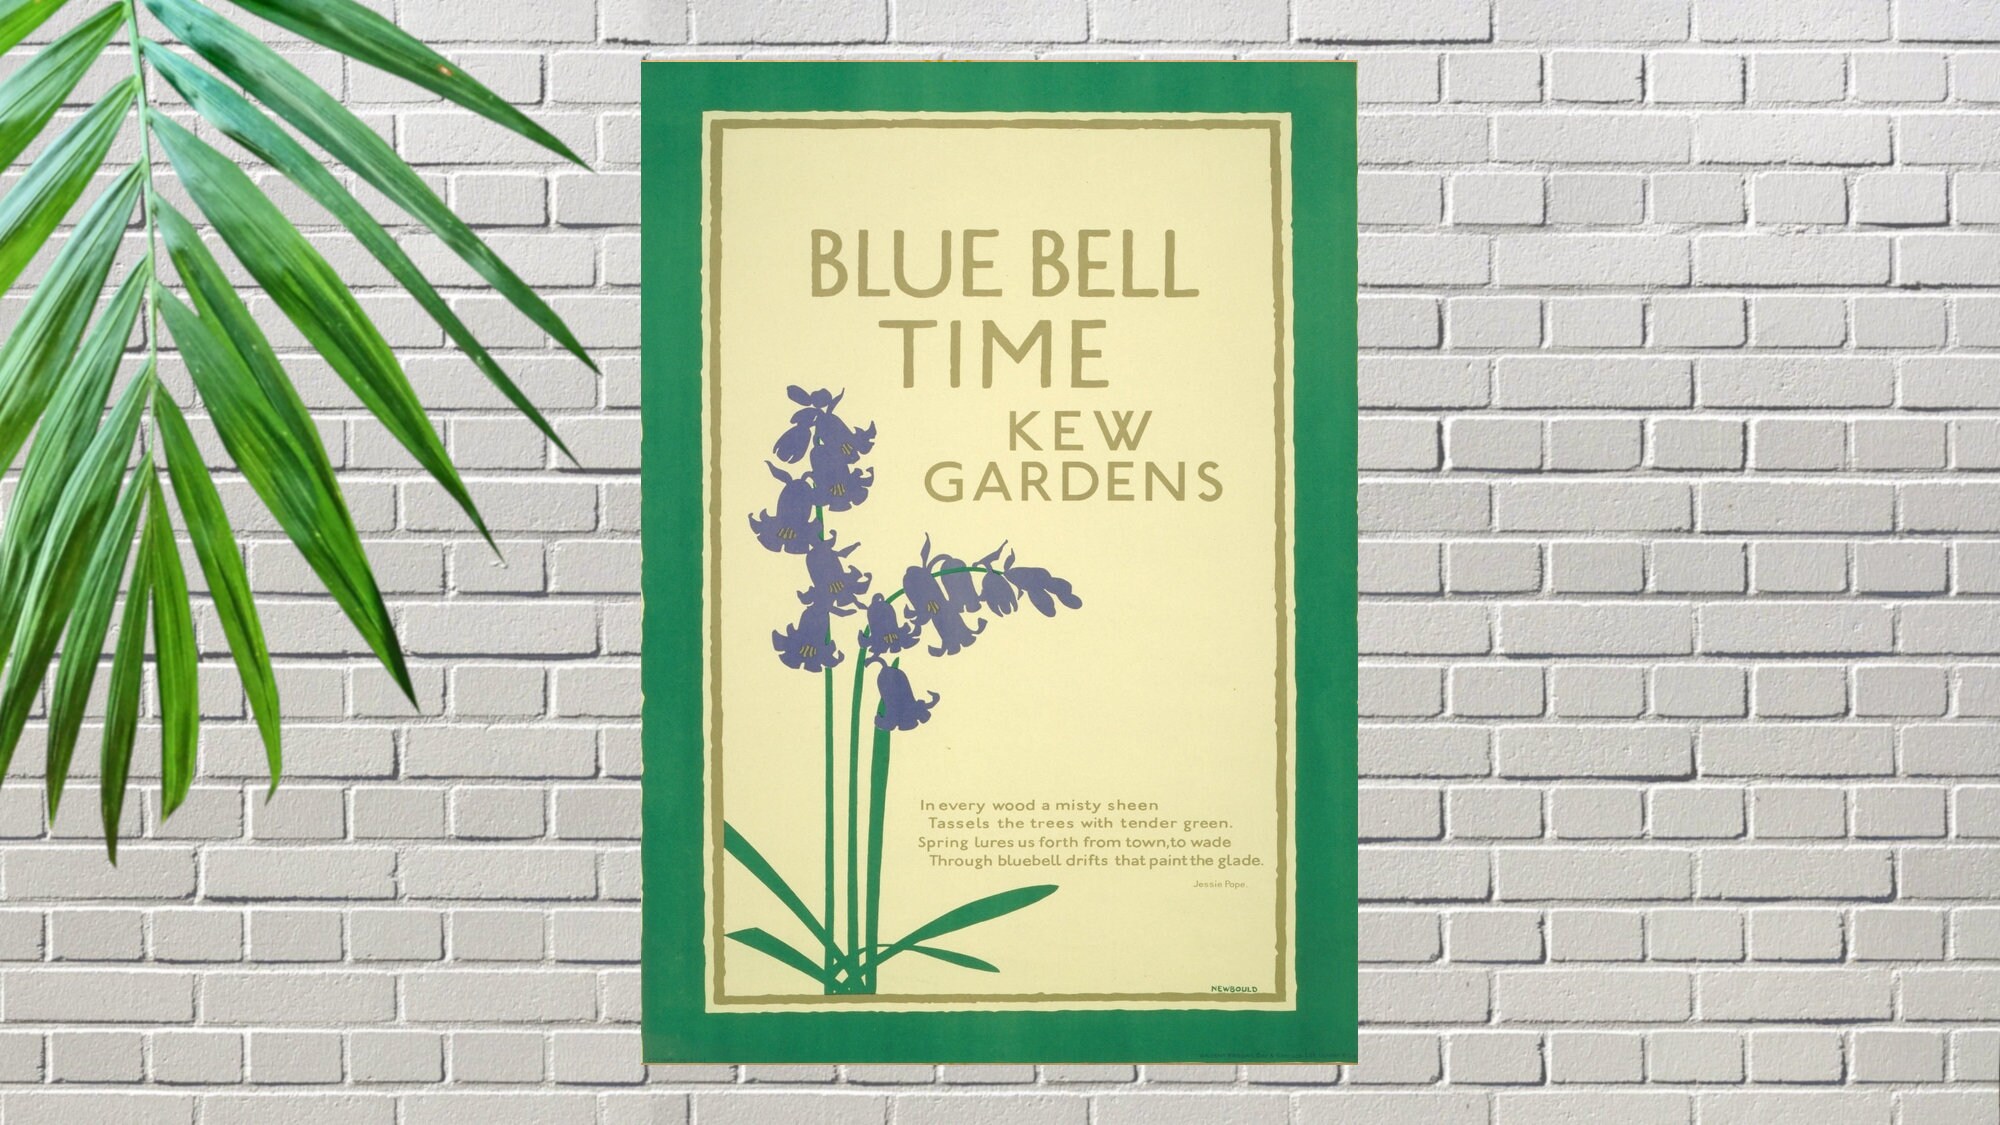 Kew Gardens Bluebells Travel Underground London Vintage Poster Print Retro Art 